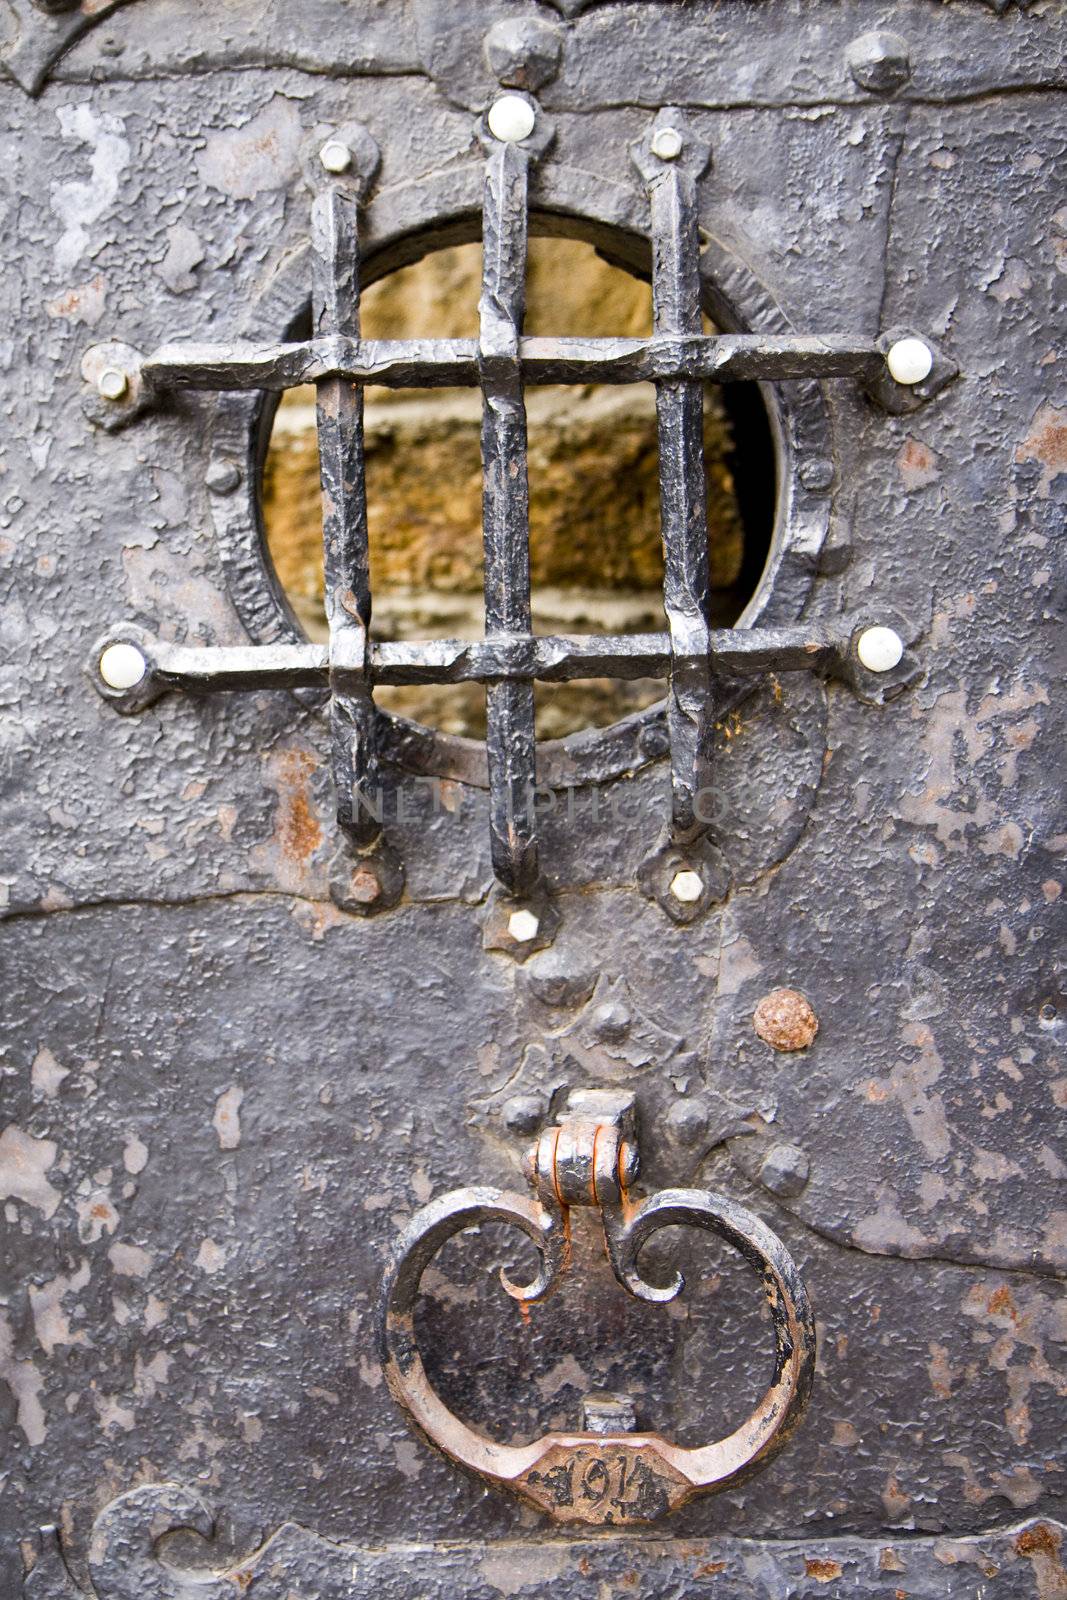 Steel medieval knocker on the old metal historic door with bars